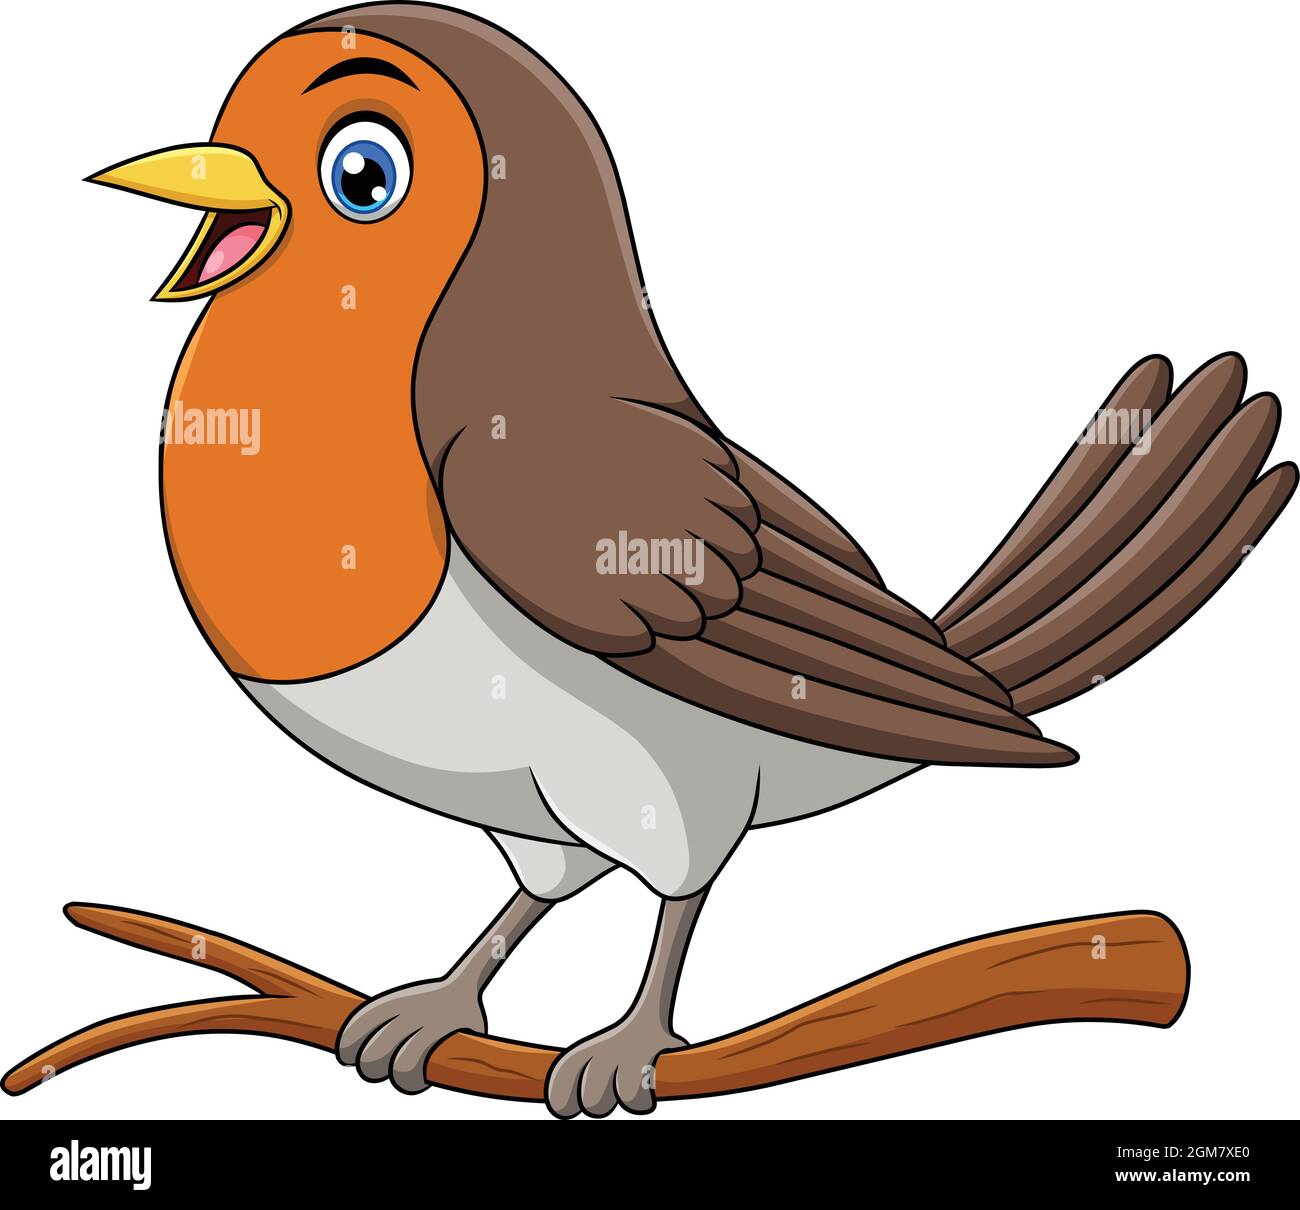 Cute Robin bird cartoon vector illustration Stock Vector Image & Art - Alamy